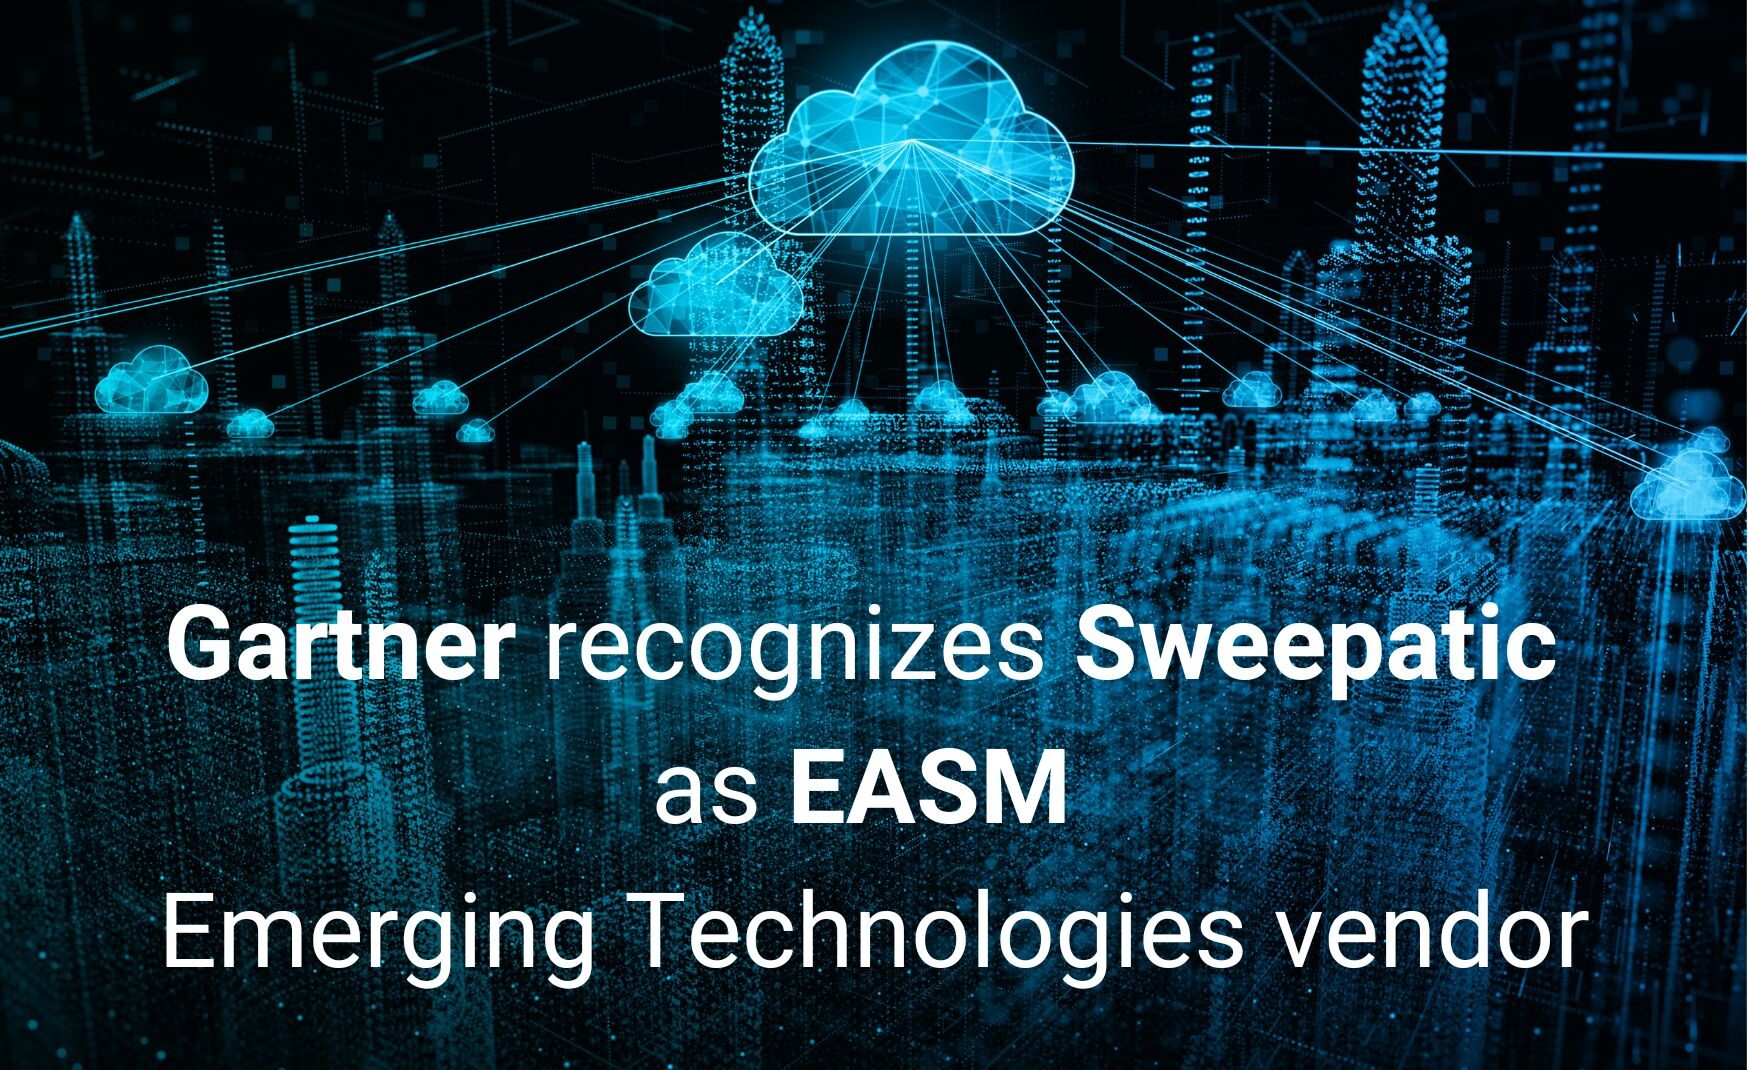 Gartner recognizes Sweepatic as EASM vendor